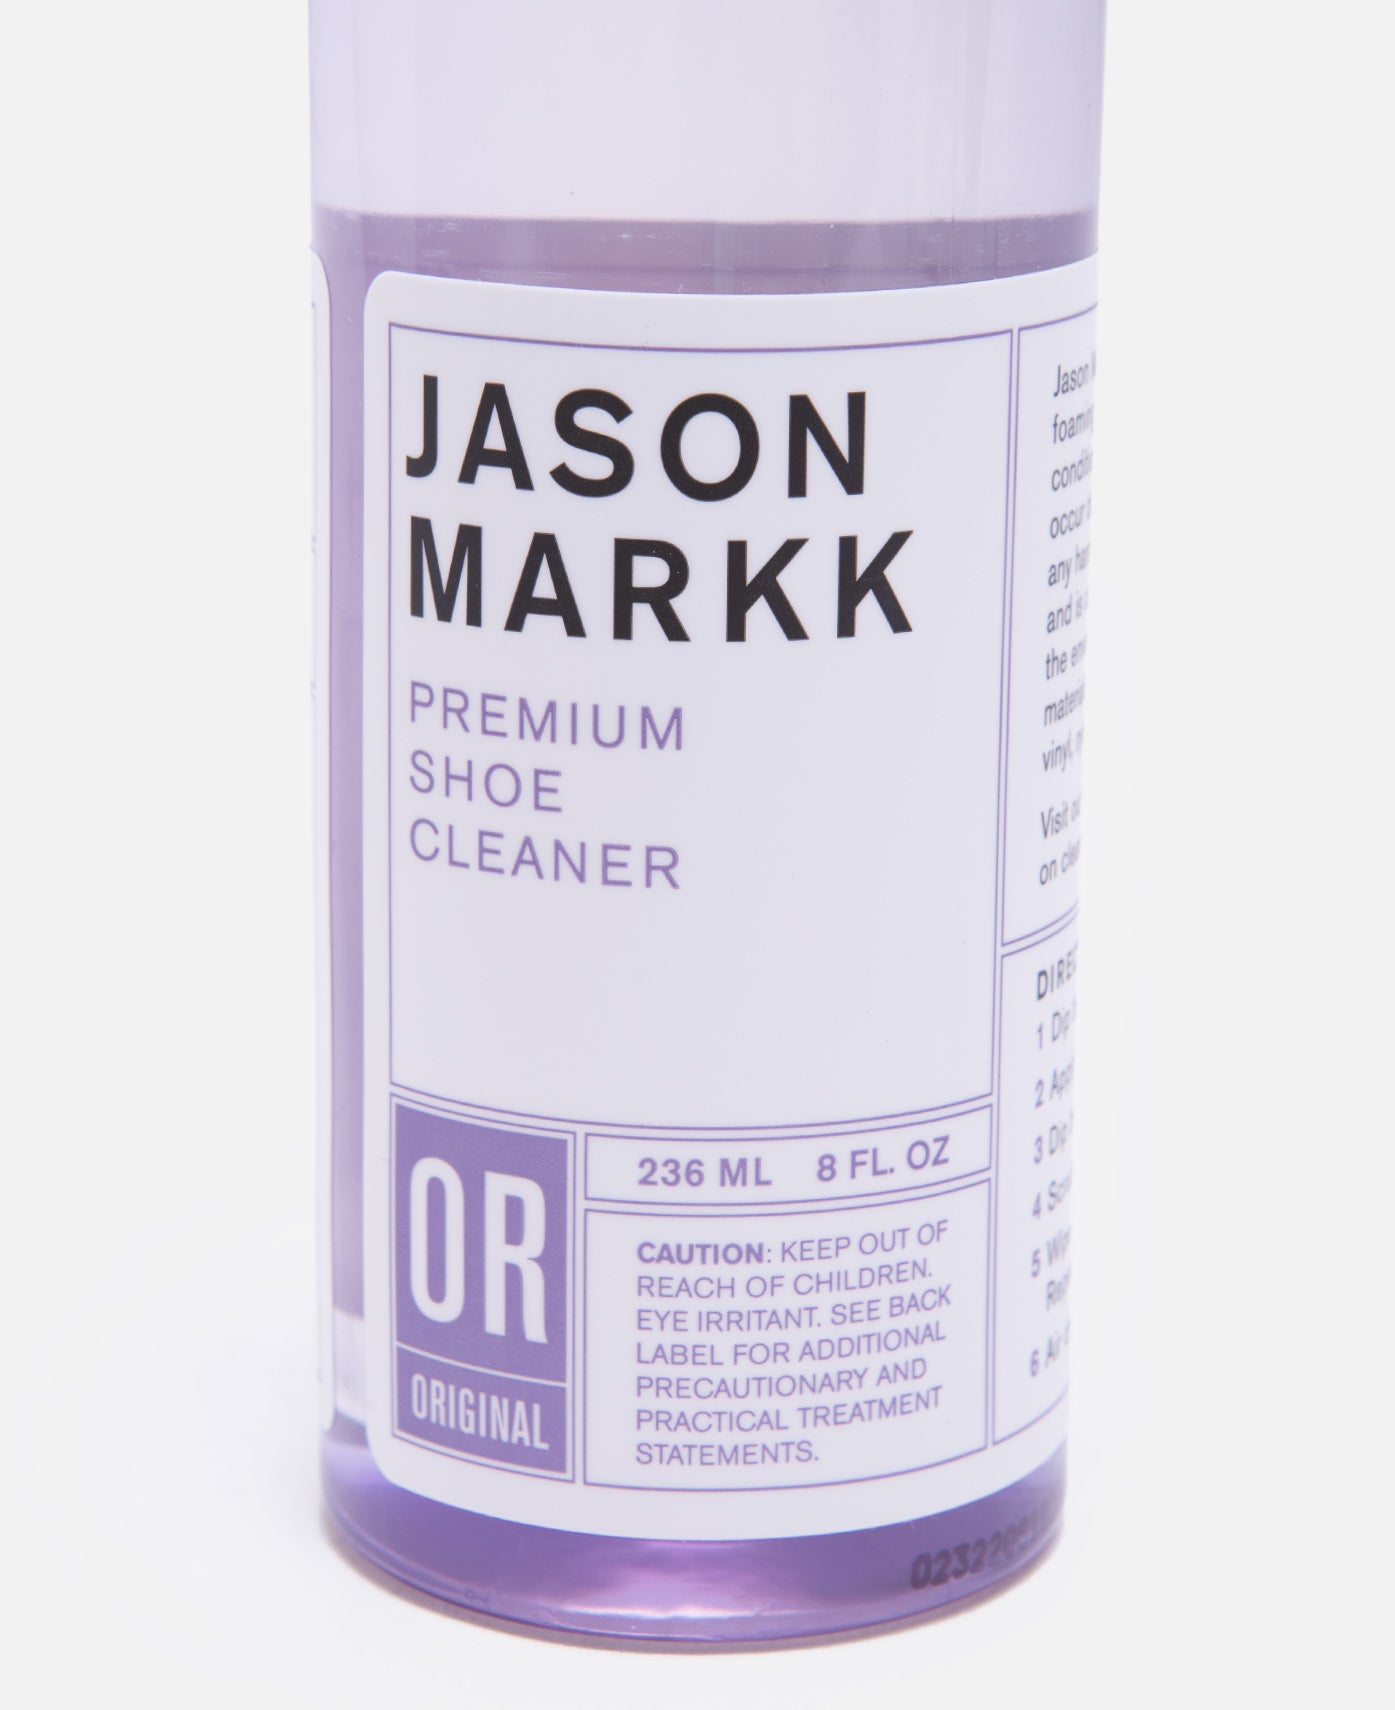 Jason Markk Premium Shoe Cleaner 8 Fl OZ 